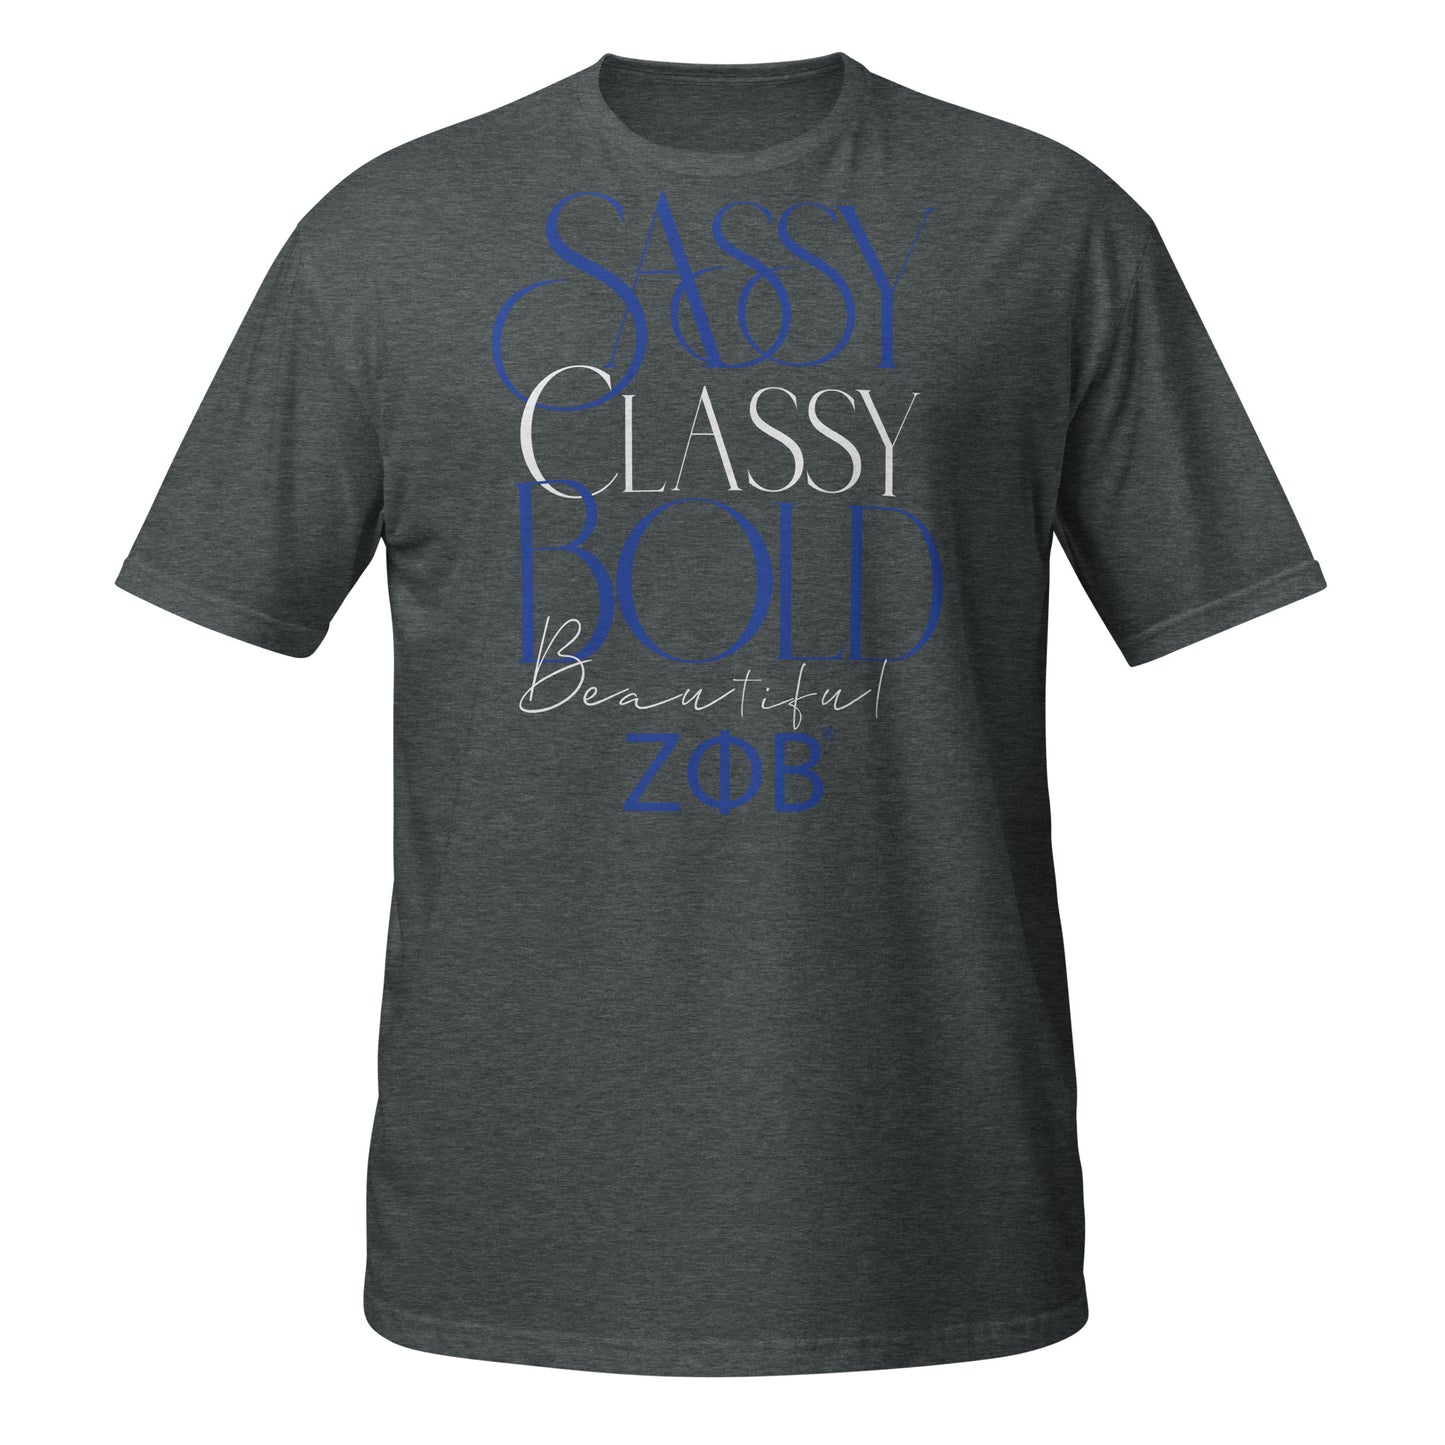 Zeta Sassy Classy T-Shirt